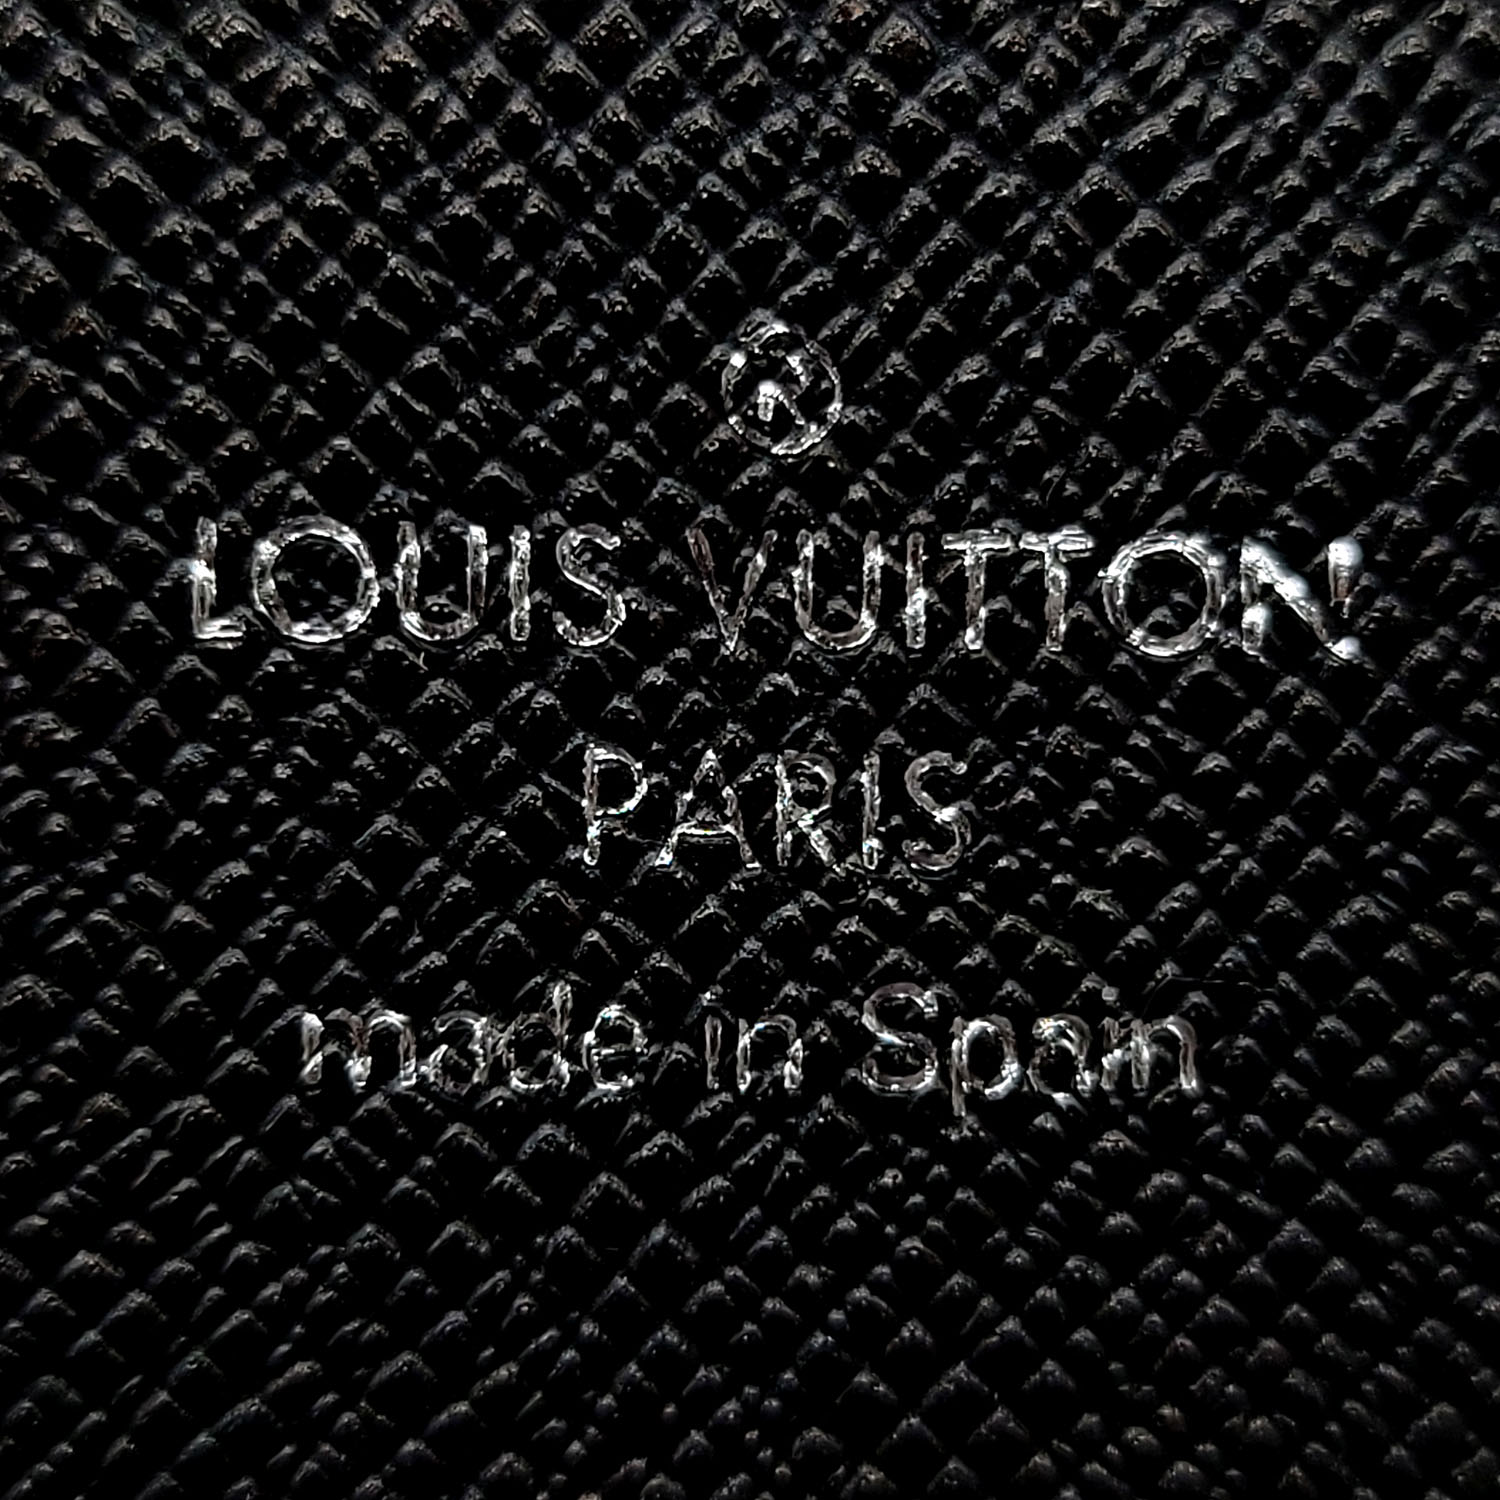 Louis Vuitton Initiales Damier Graphite Pattern Waist Belt Size-34